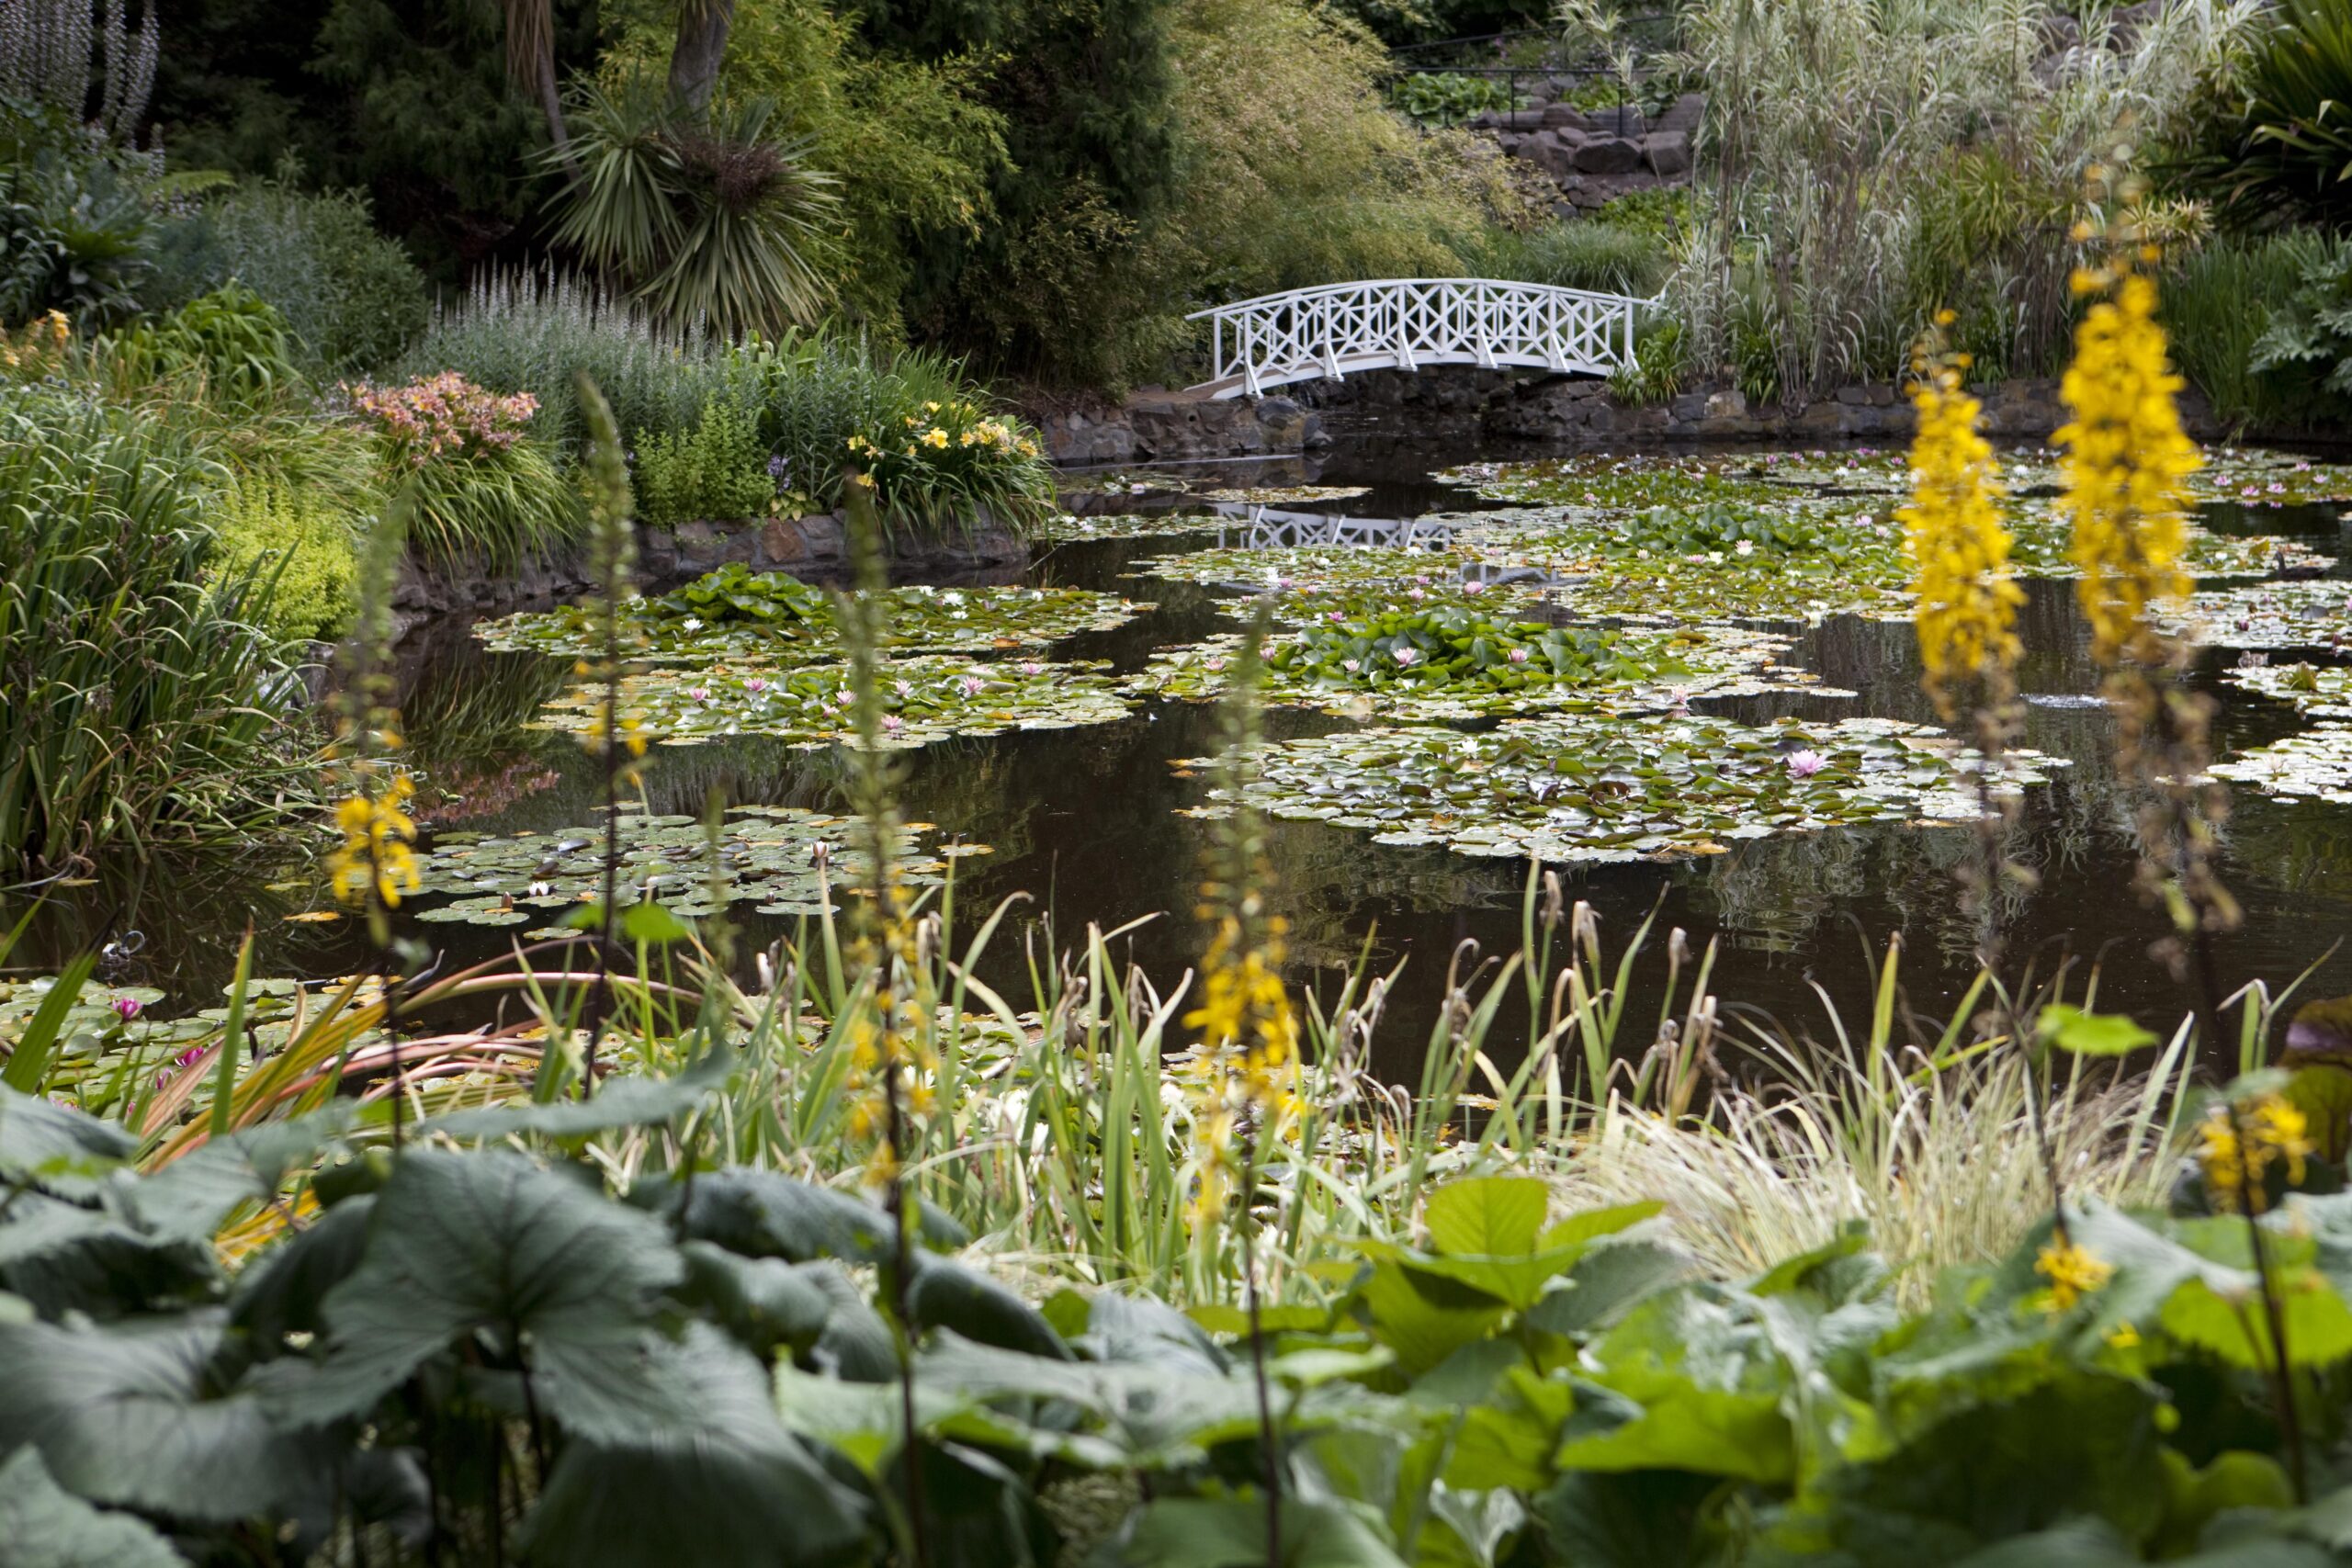 Hobart Botanic Gardens